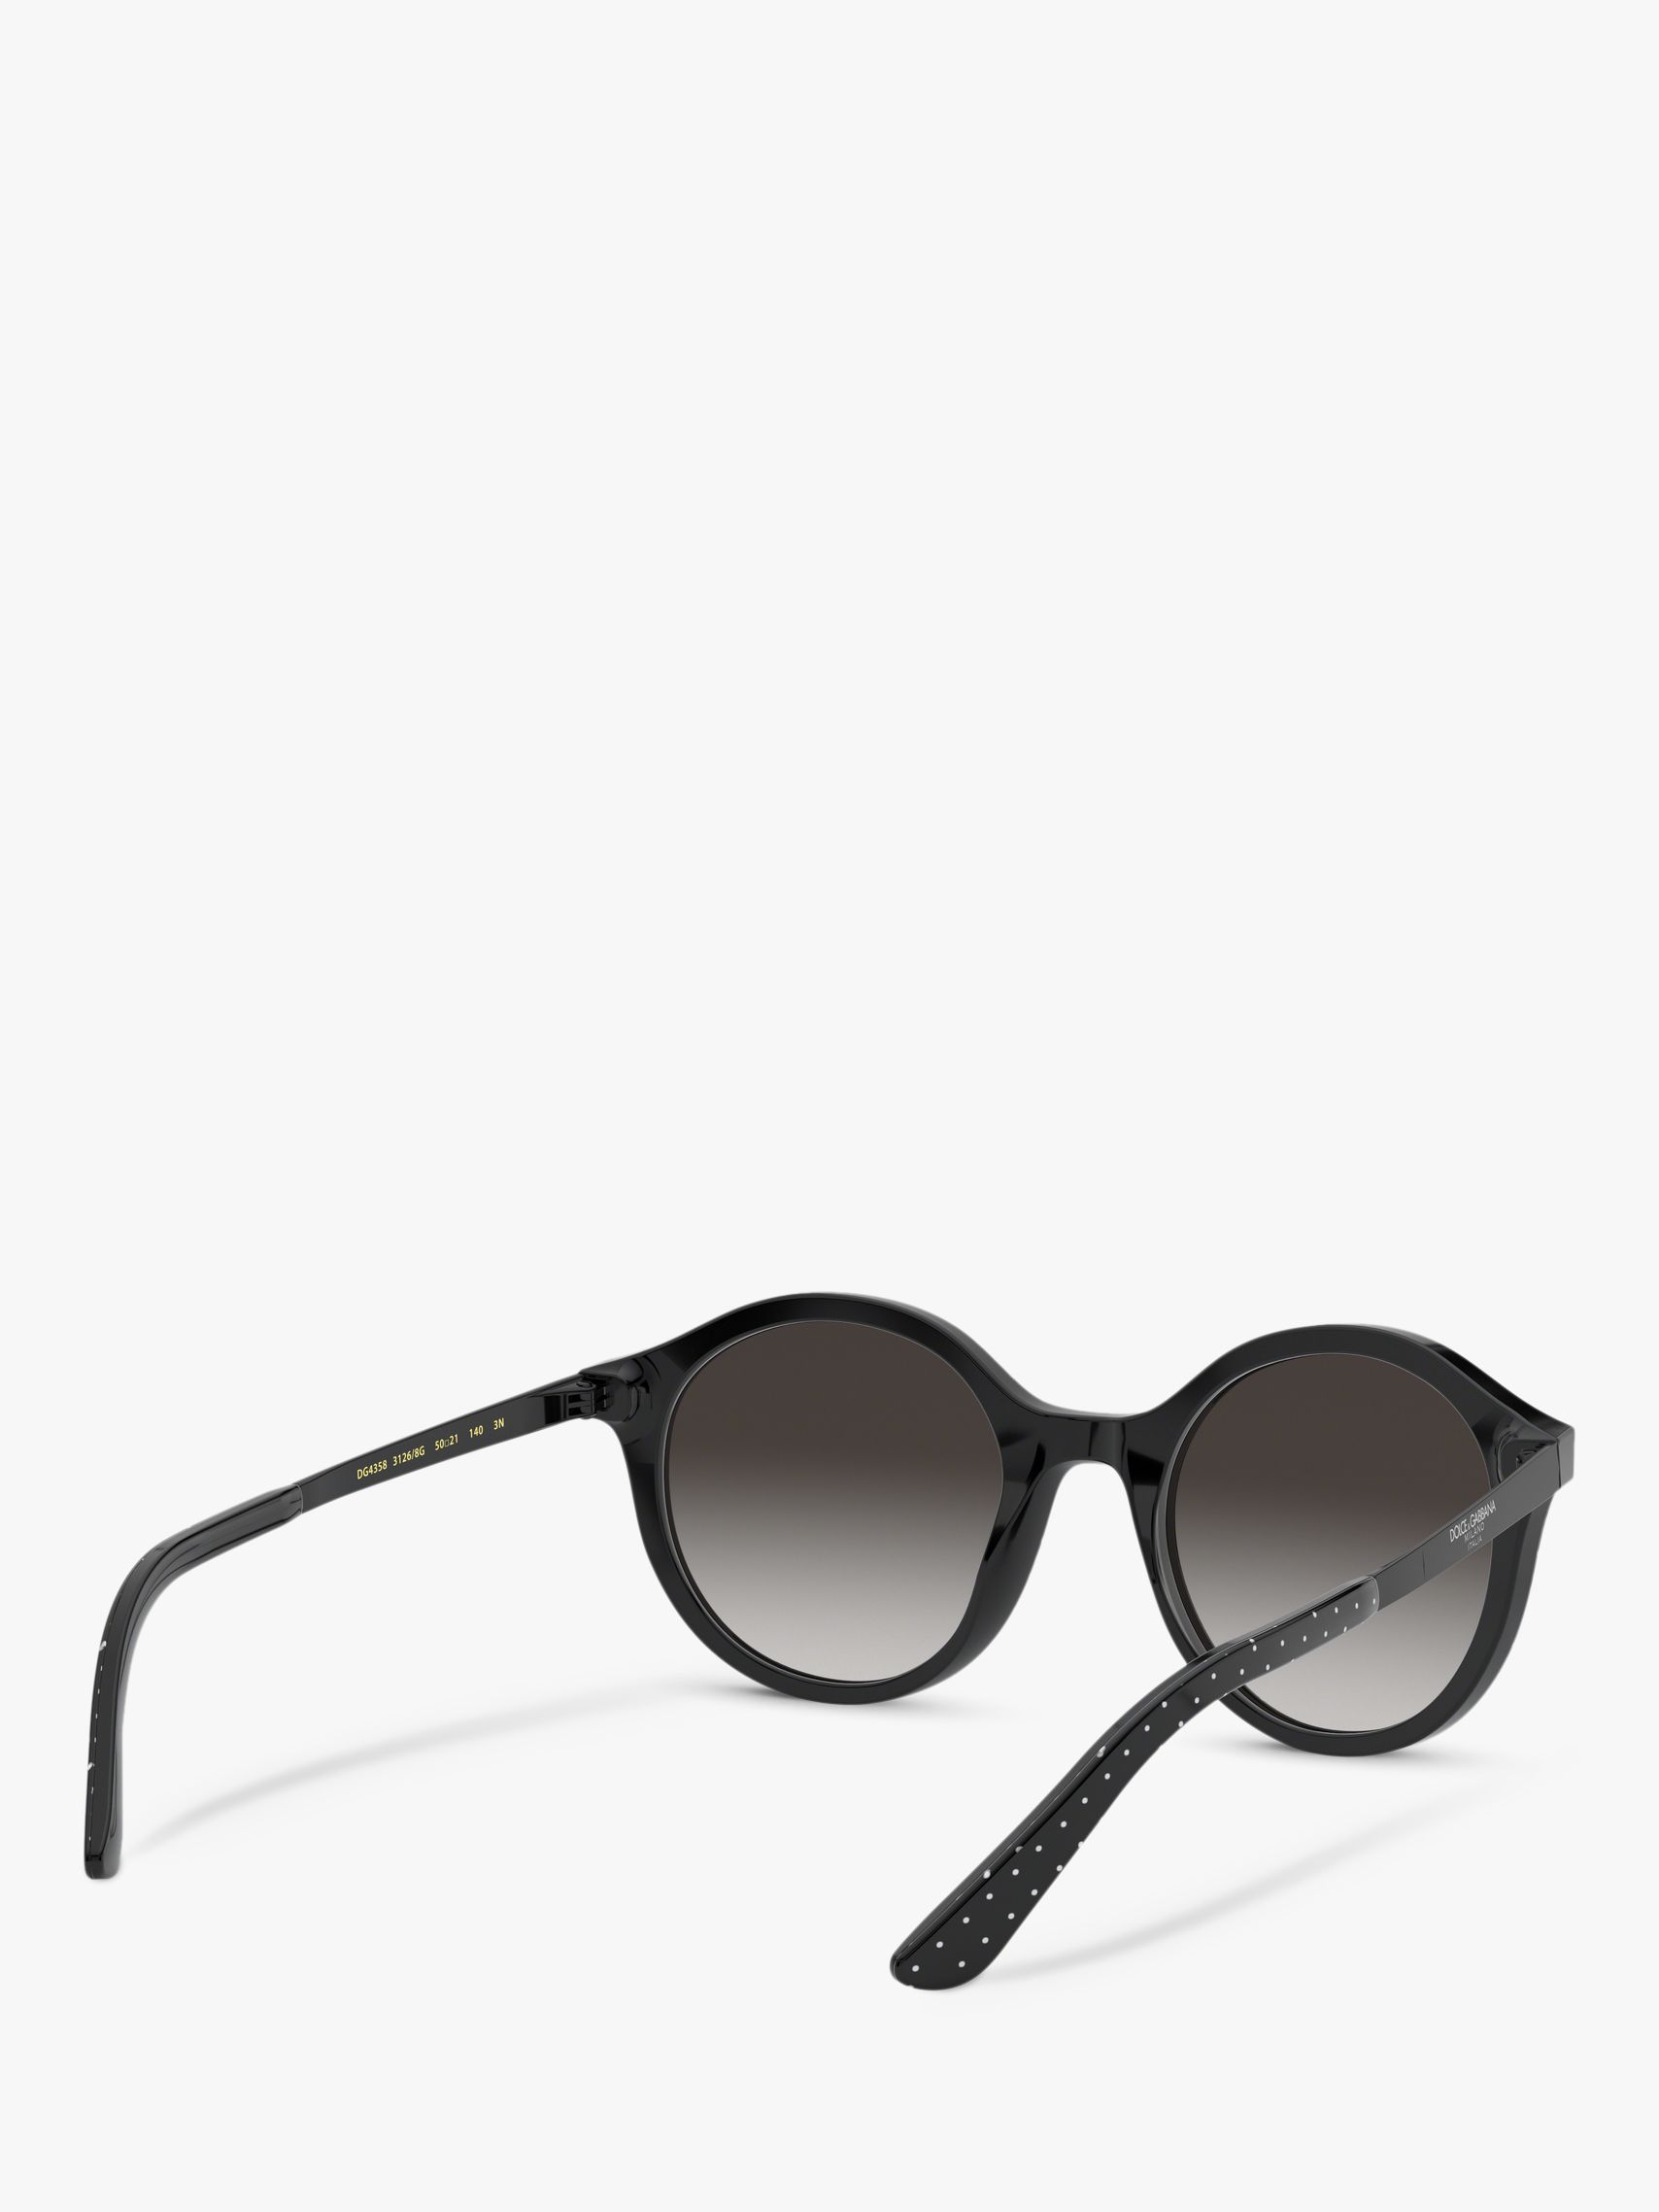 Dolce & Gabbana DG4358 Women's Oval Sunglasses